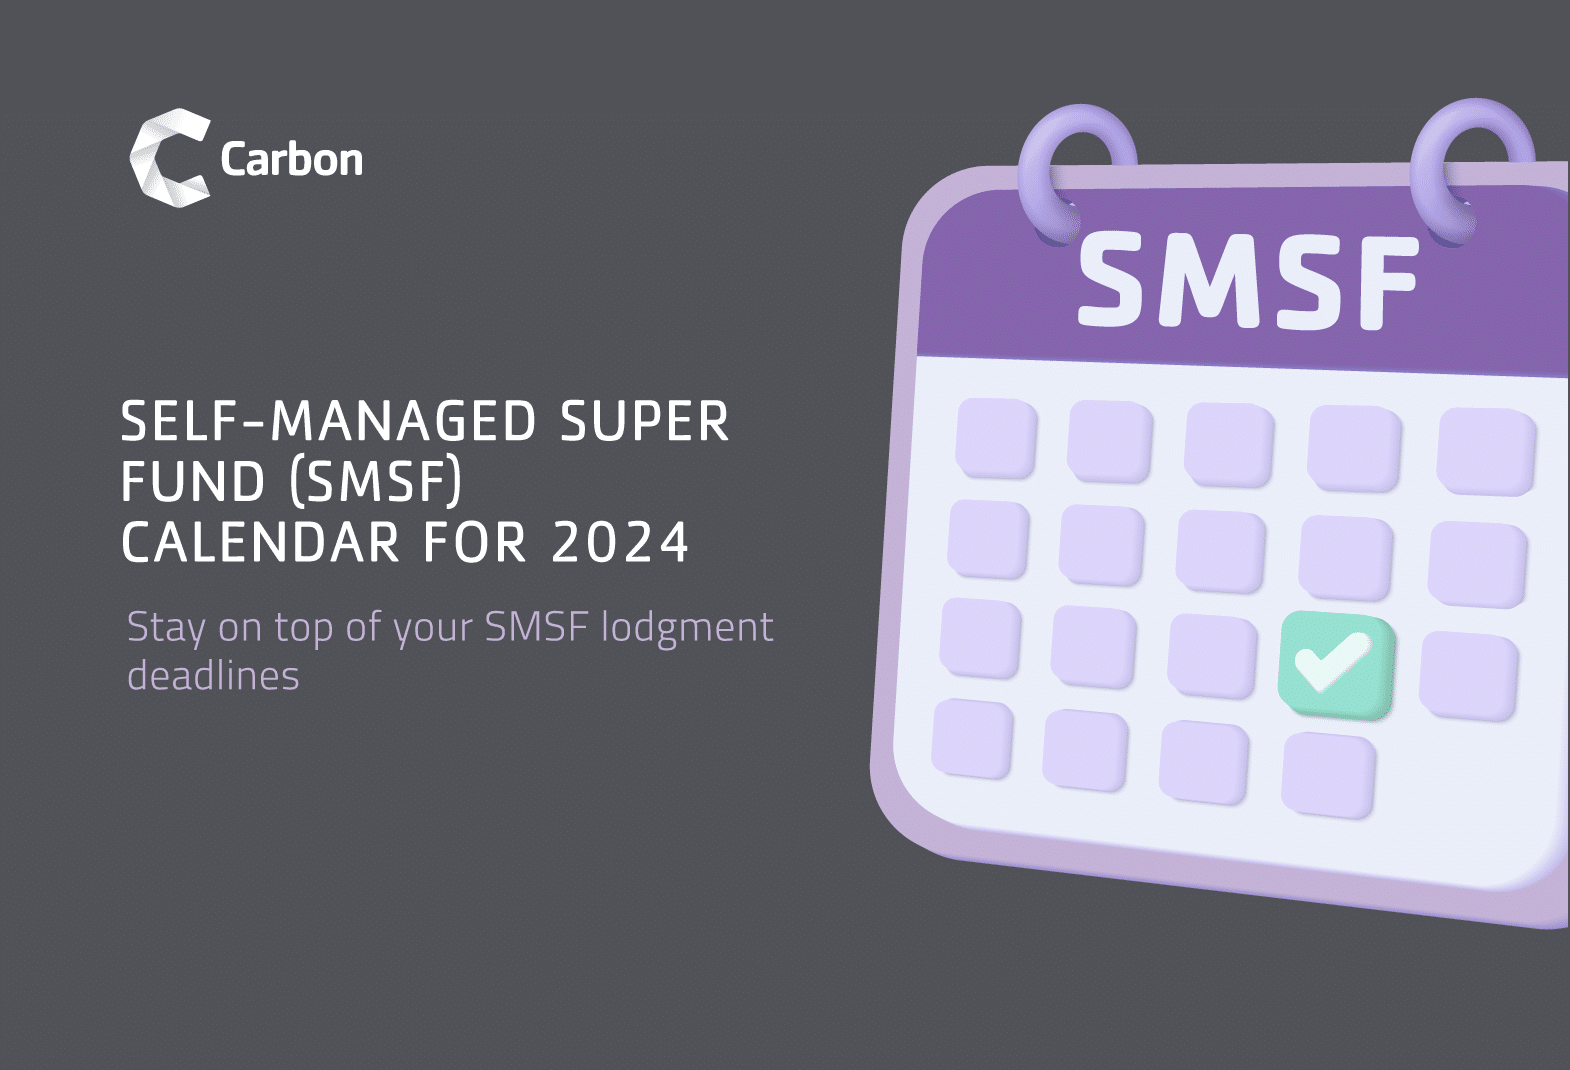 Self-Managed Super Fund (SMSF) Calendar for 2024